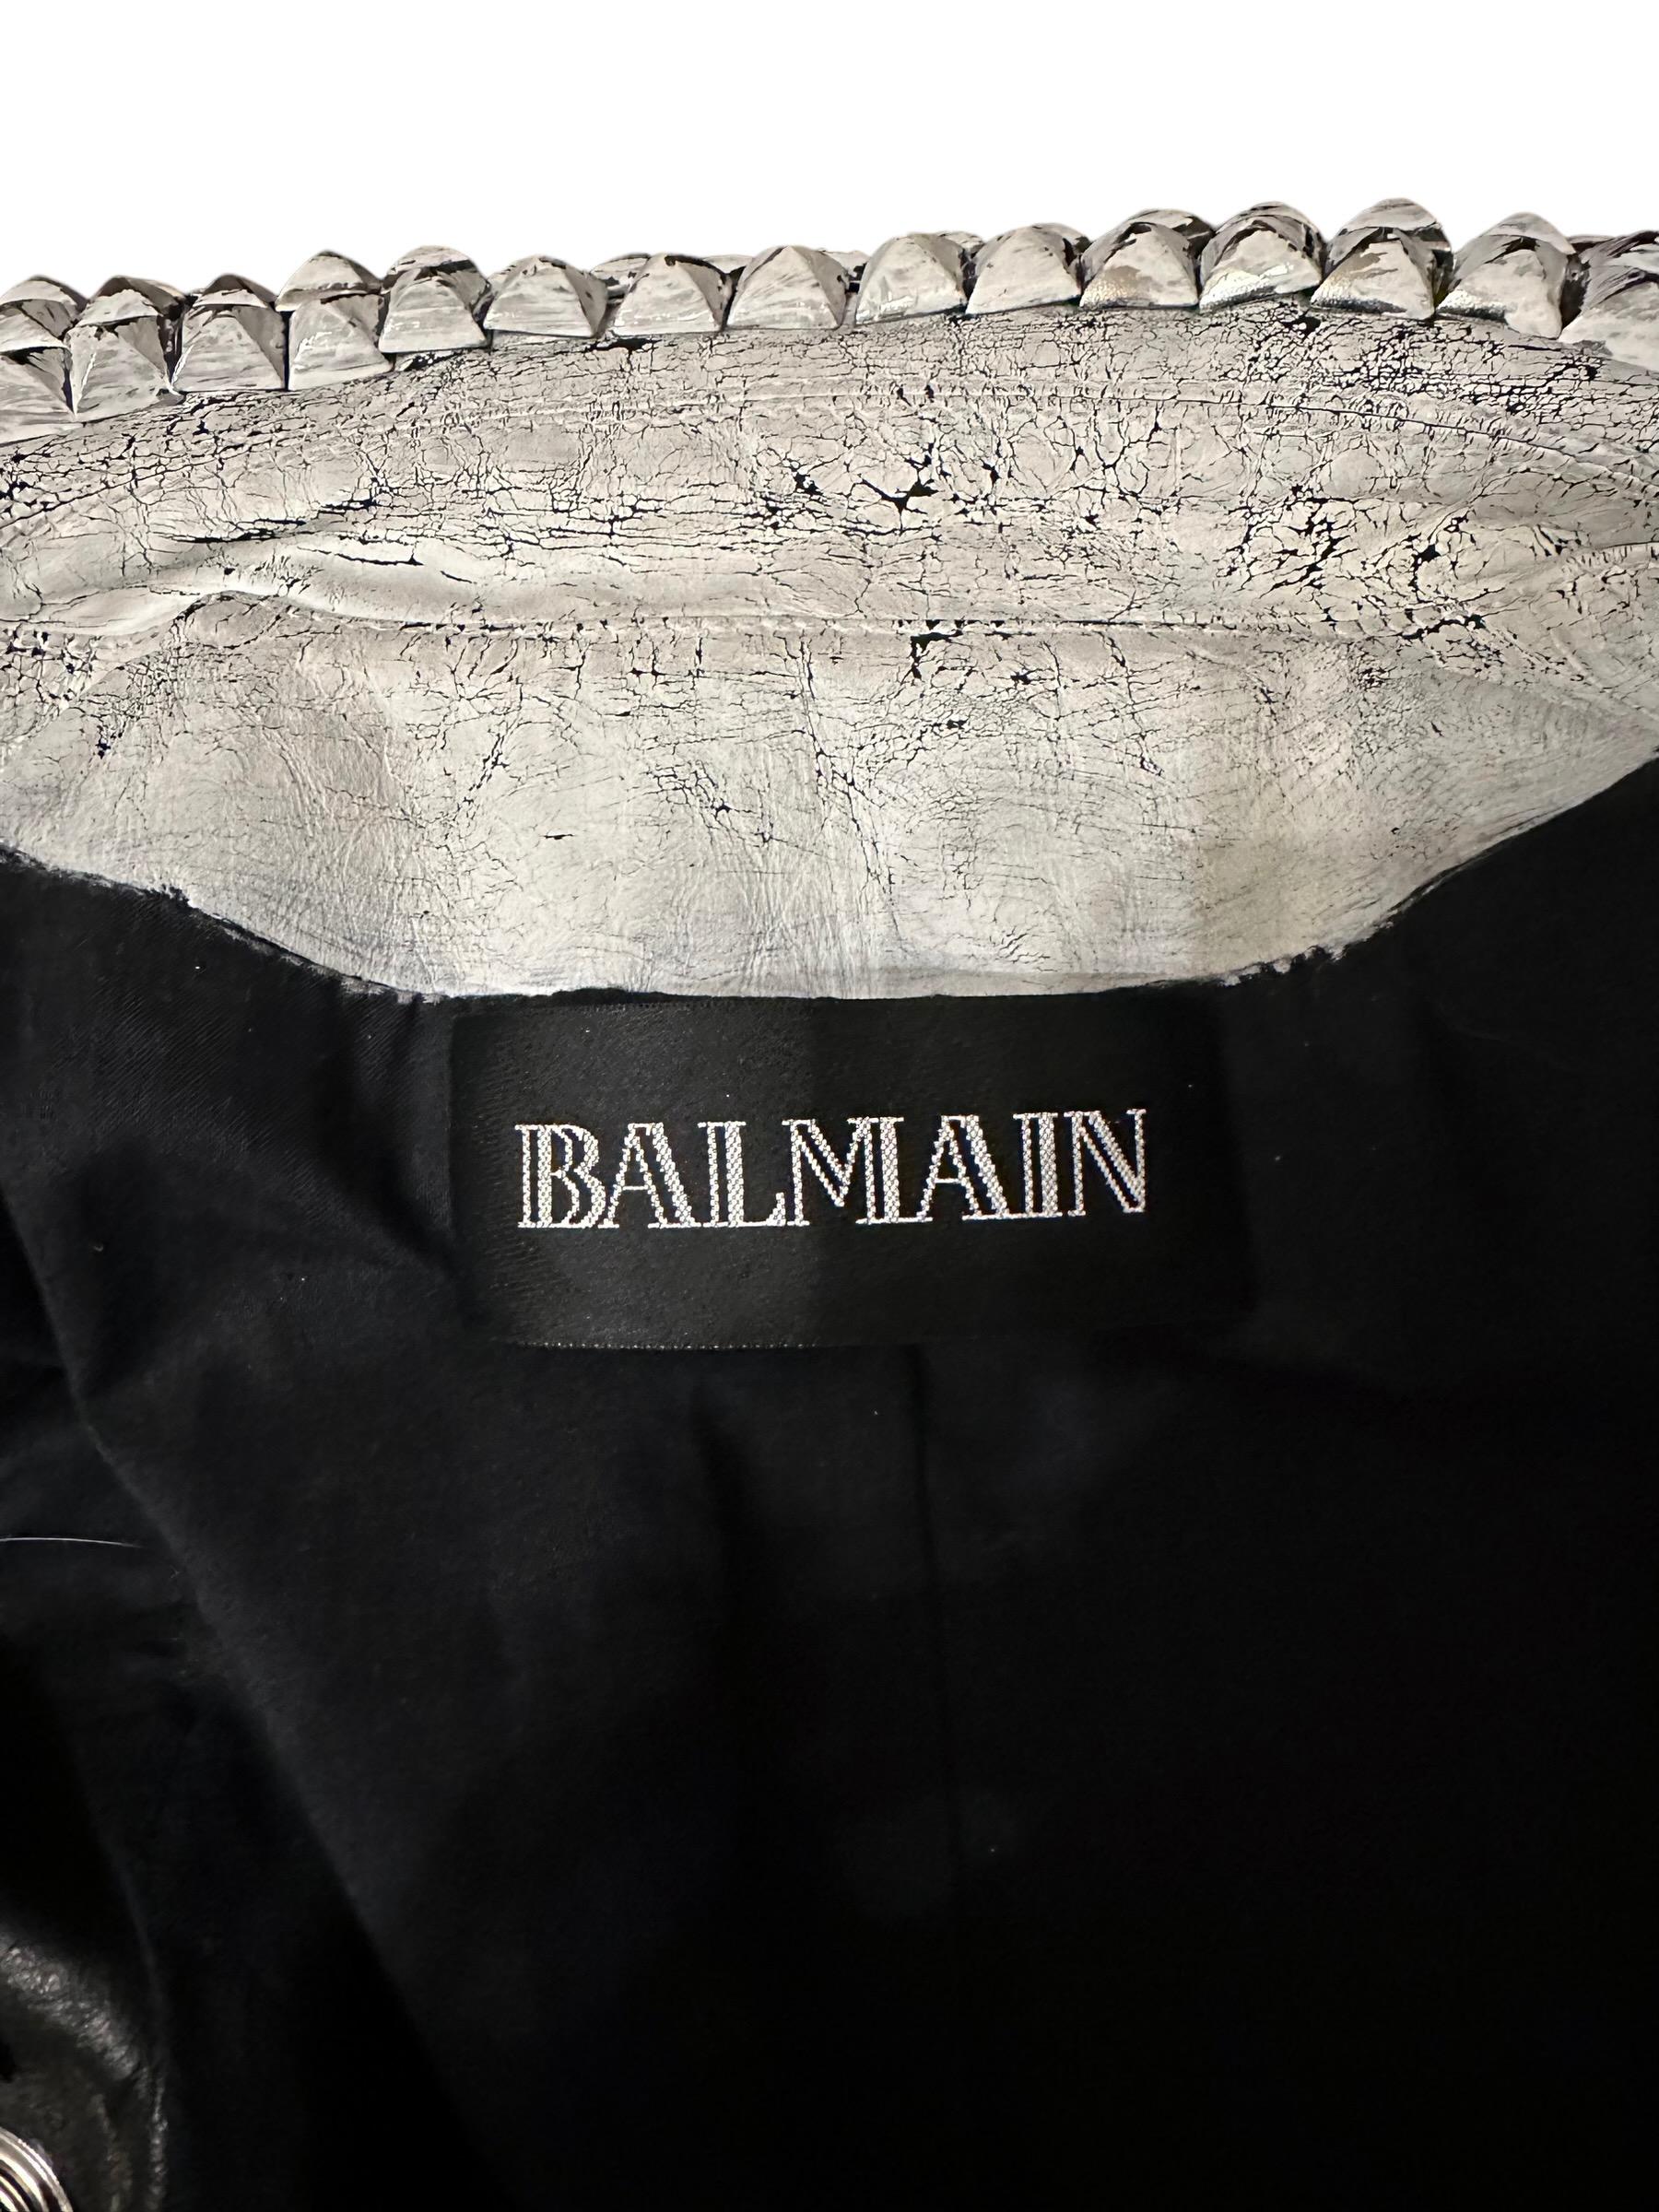 Balmain SS 2011 Rare Black Leather Studded Vest 7